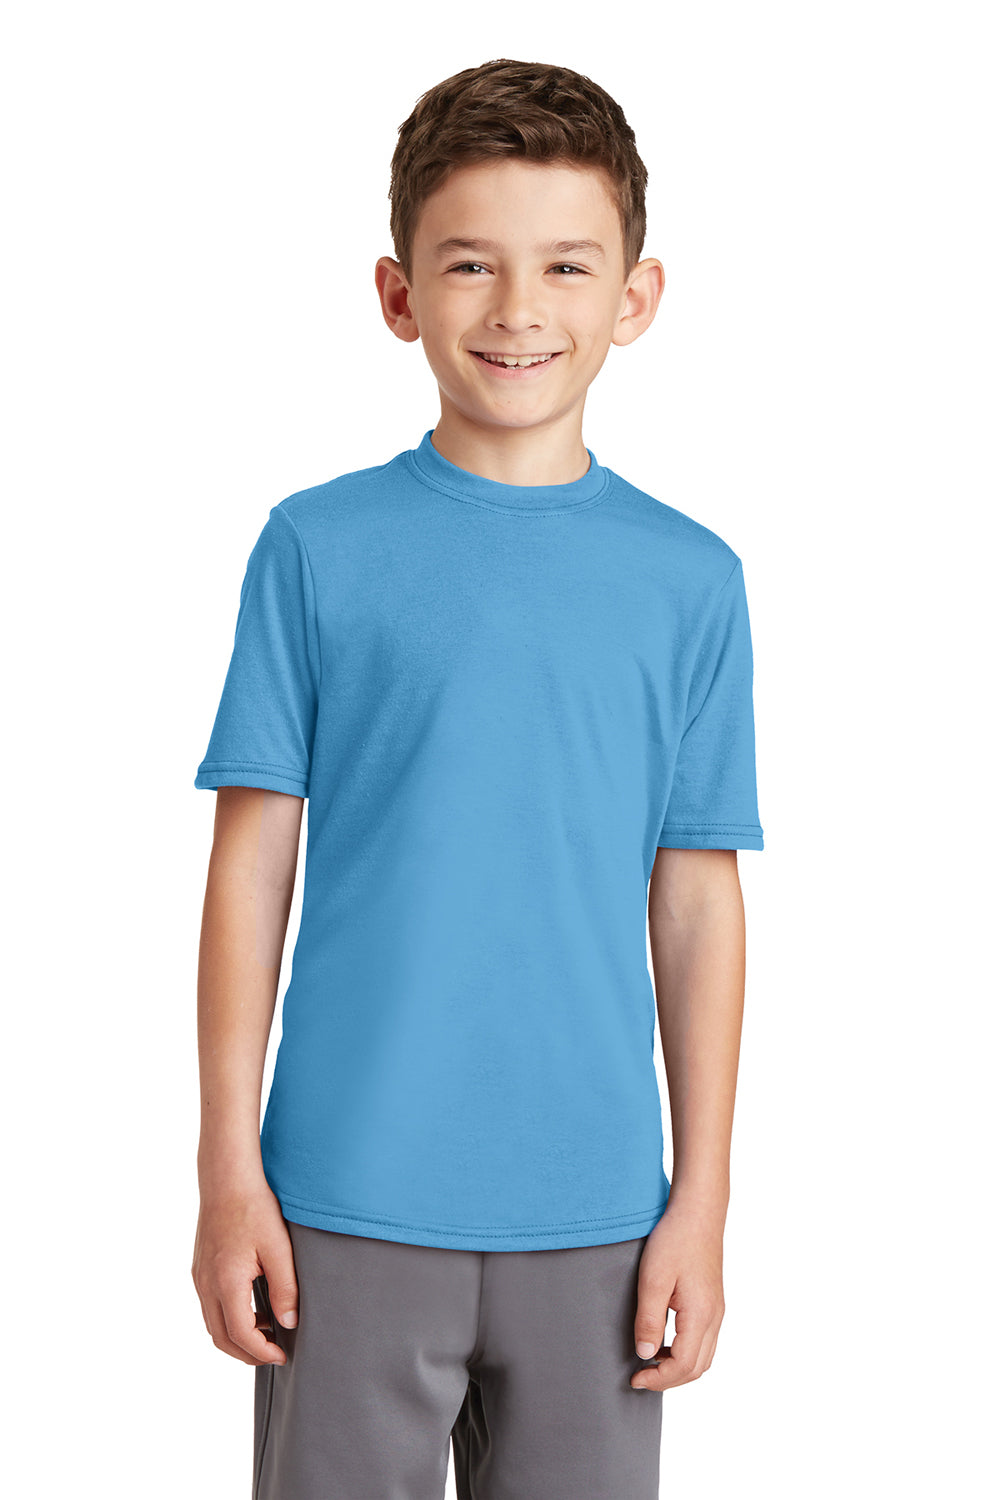 Port & Company PC381Y Youth Dry Zone Performance Moisture Wicking Short Sleeve Crewneck T-Shirt Aqua Blue Front